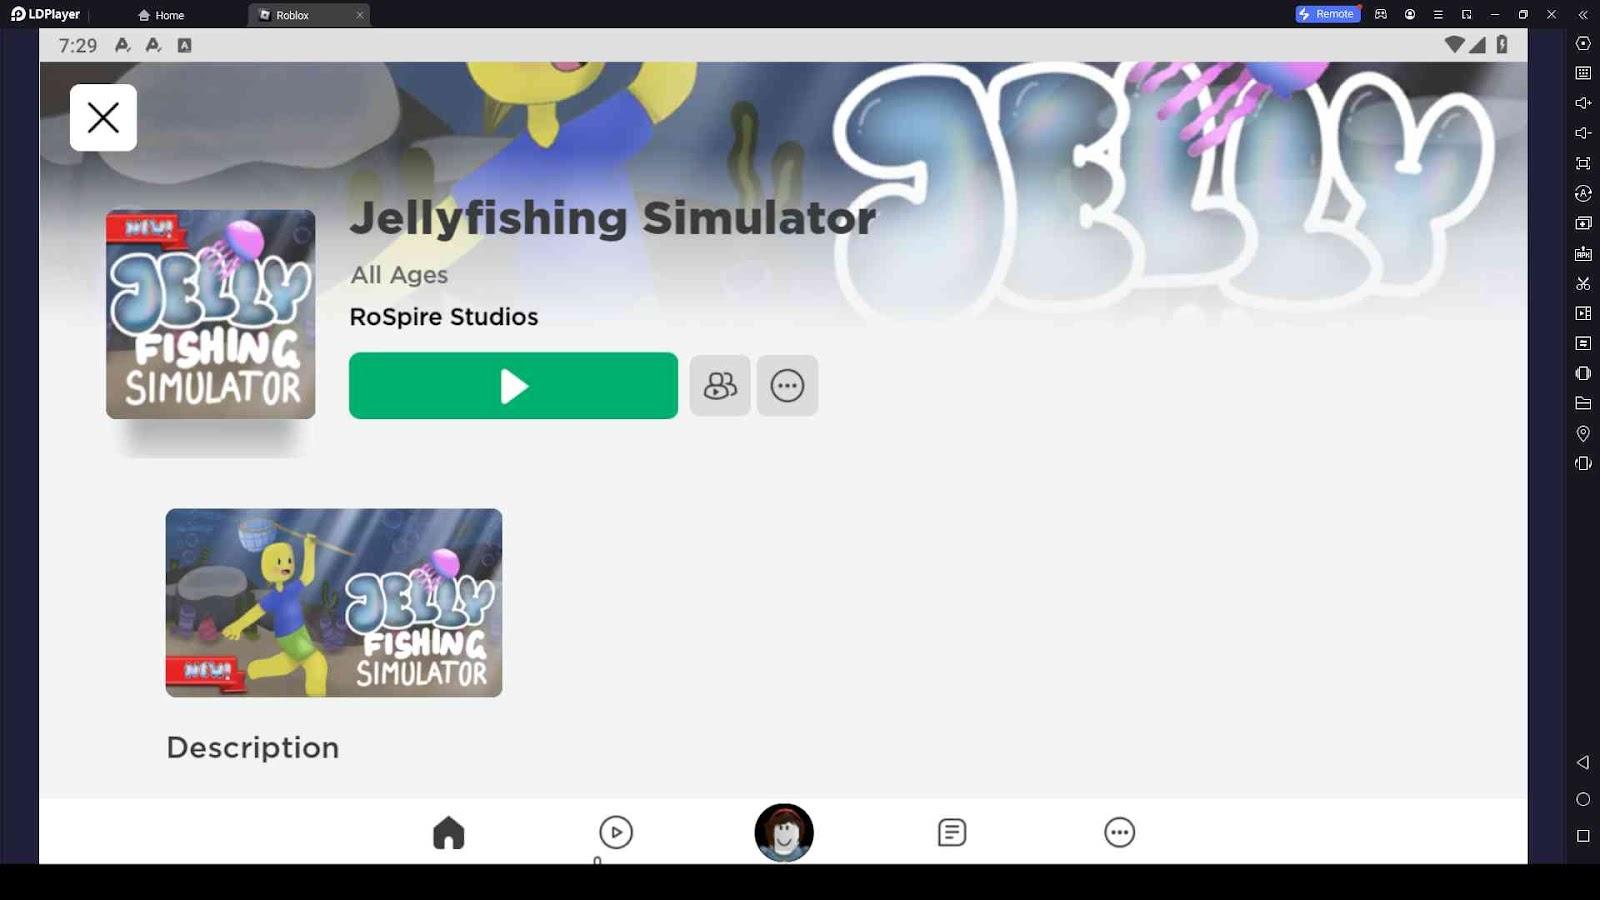 Roblox Jellyfishing Simulator Codes: Catching Profits - 2023  December-Redeem Code-LDPlayer